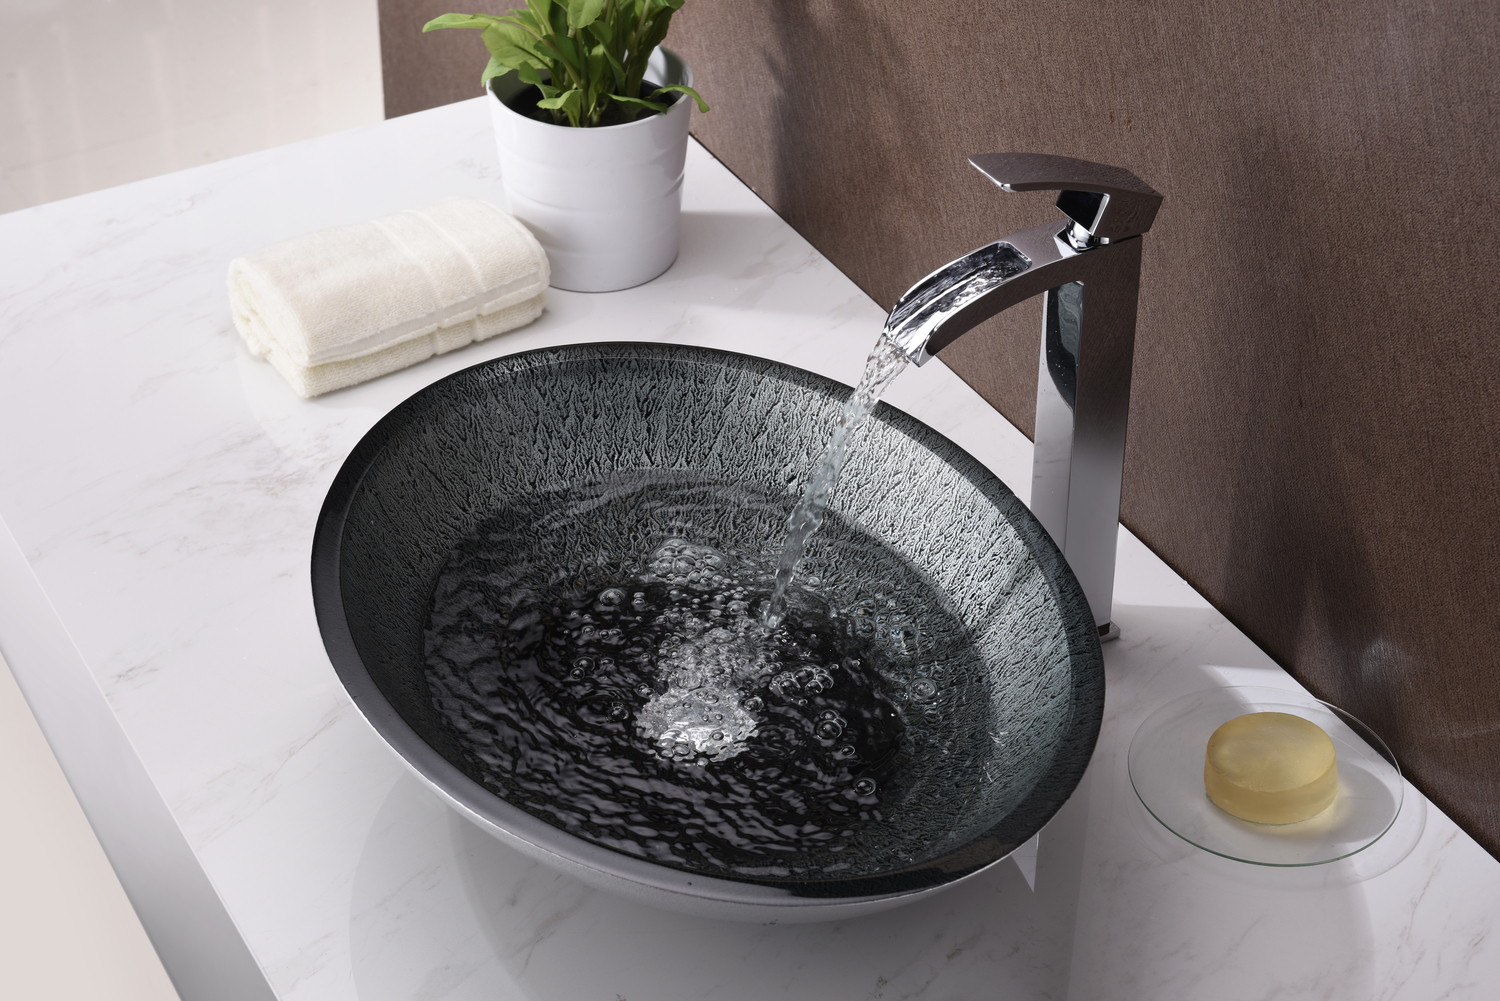 58 vanity Anzzi BATHROOM - Sinks - Vessel - Tempered Glass Black